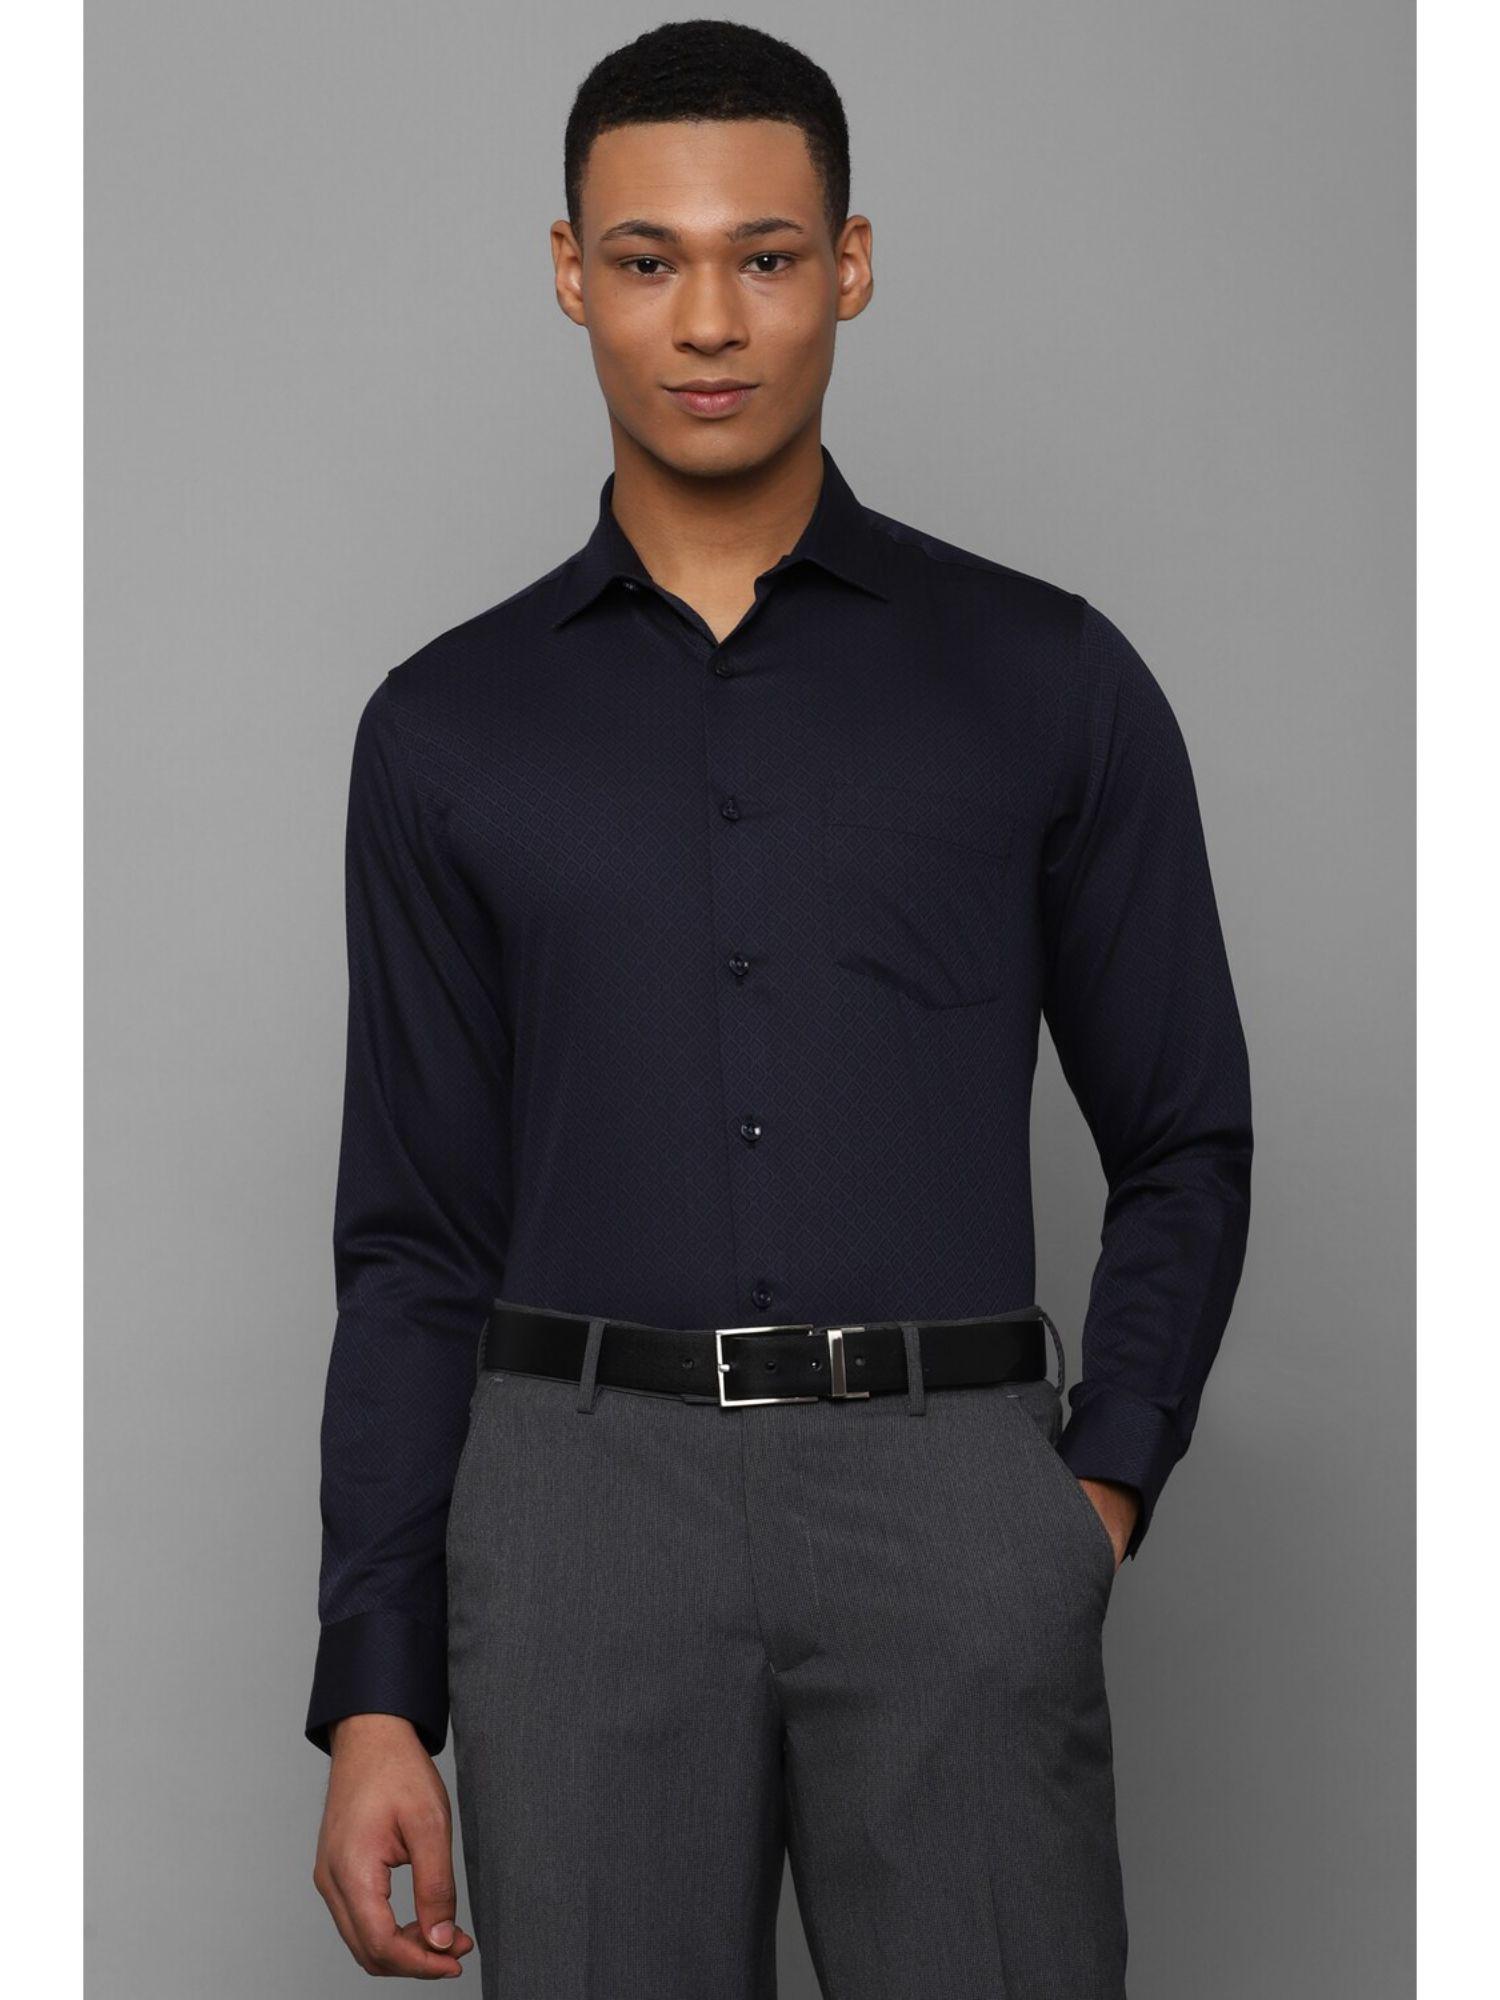 men navy blue printed full sleeves formal shirt